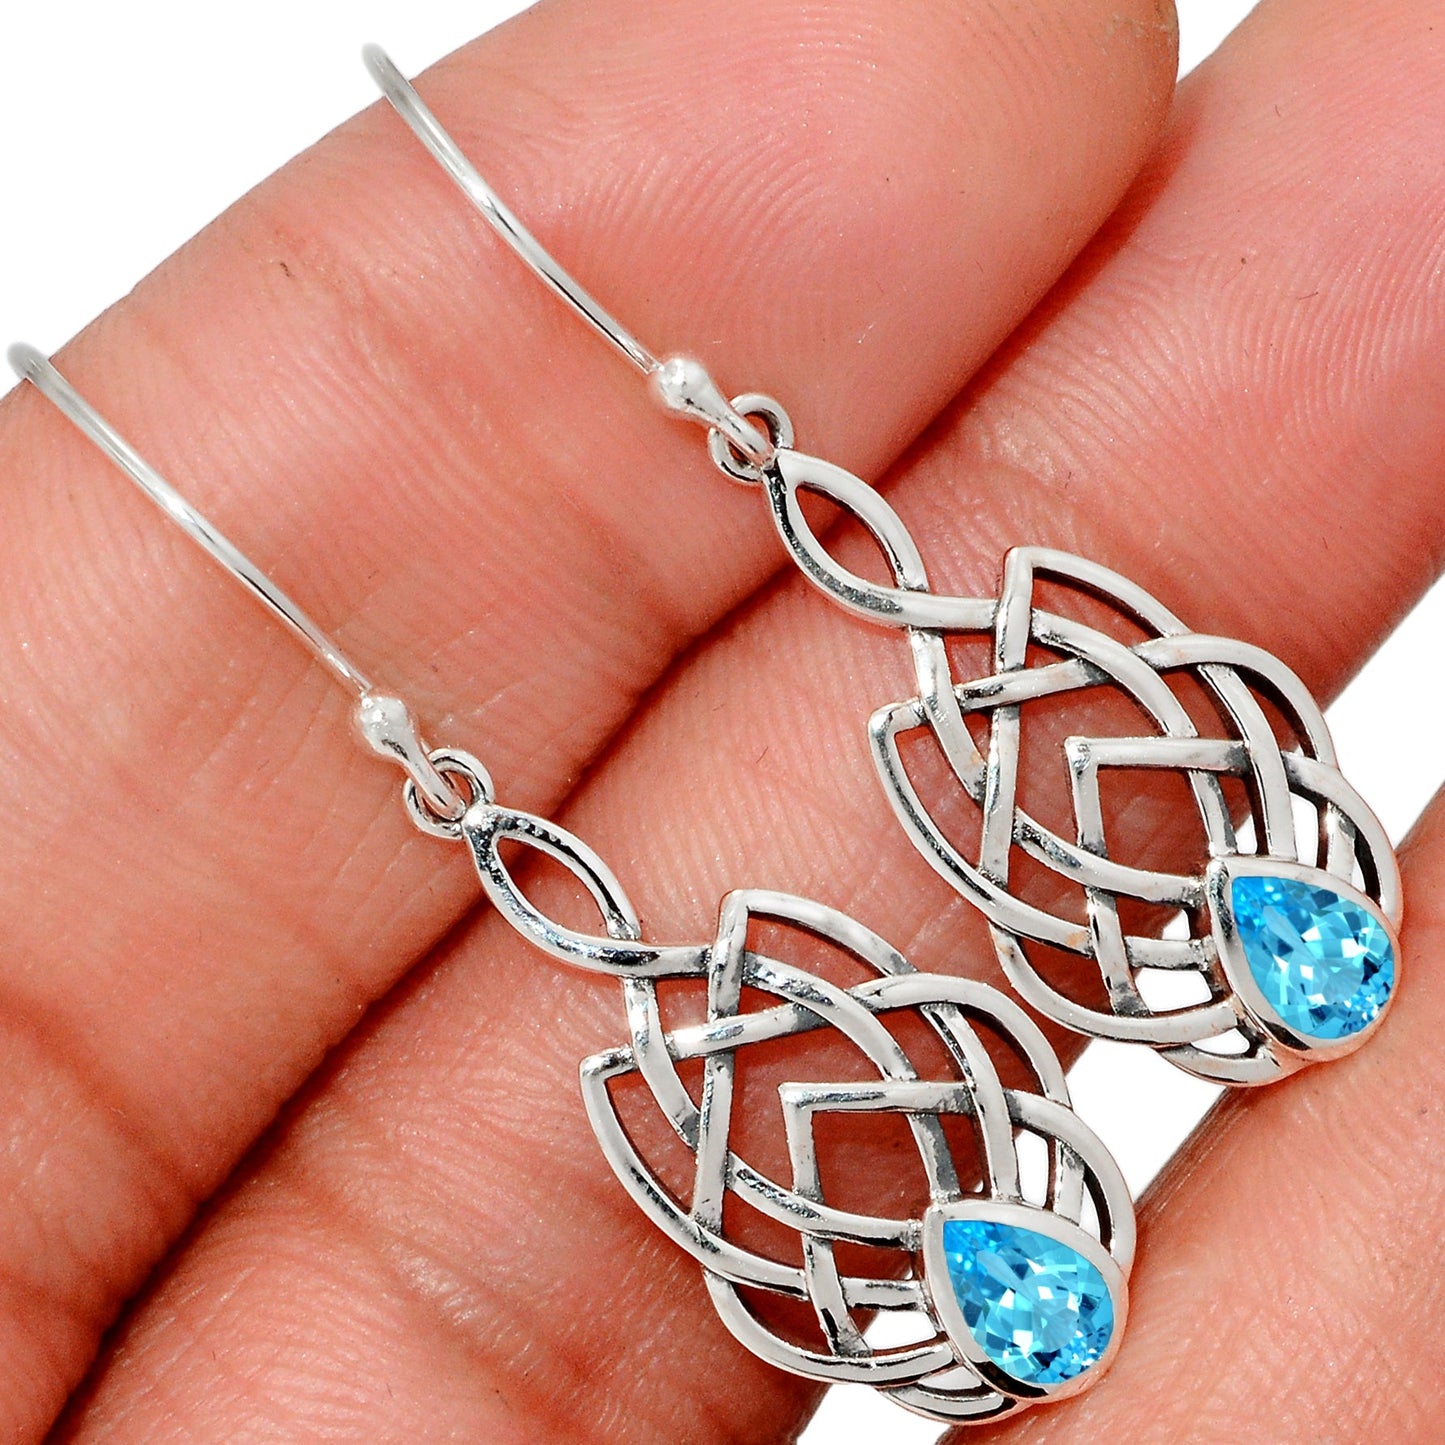 Sterling Silver Blue Topaz Celtic Earrings